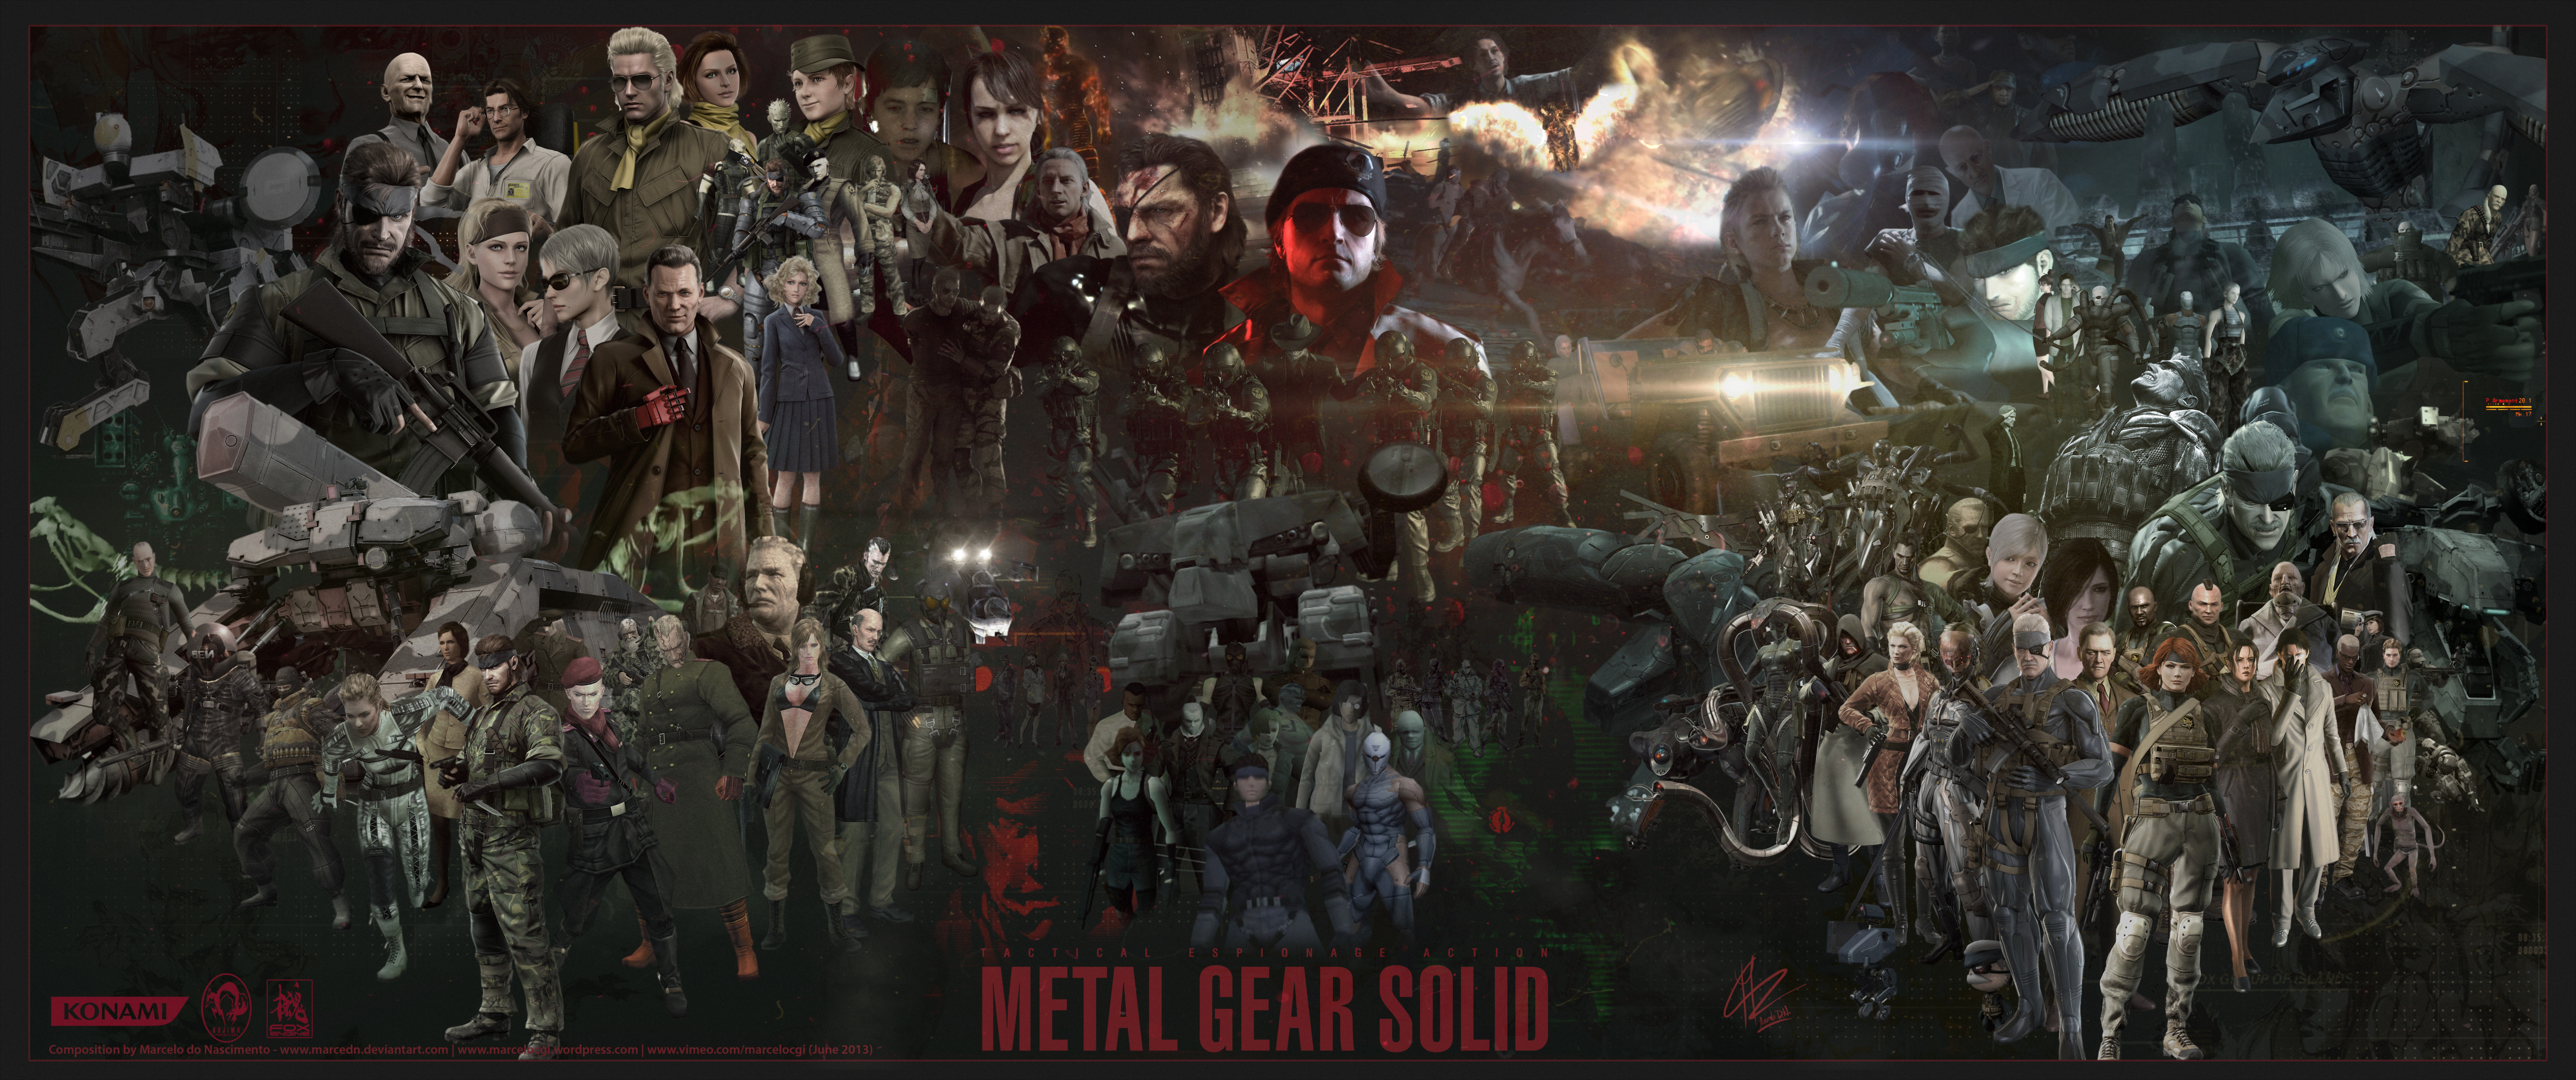 Metal Gear Solid #11